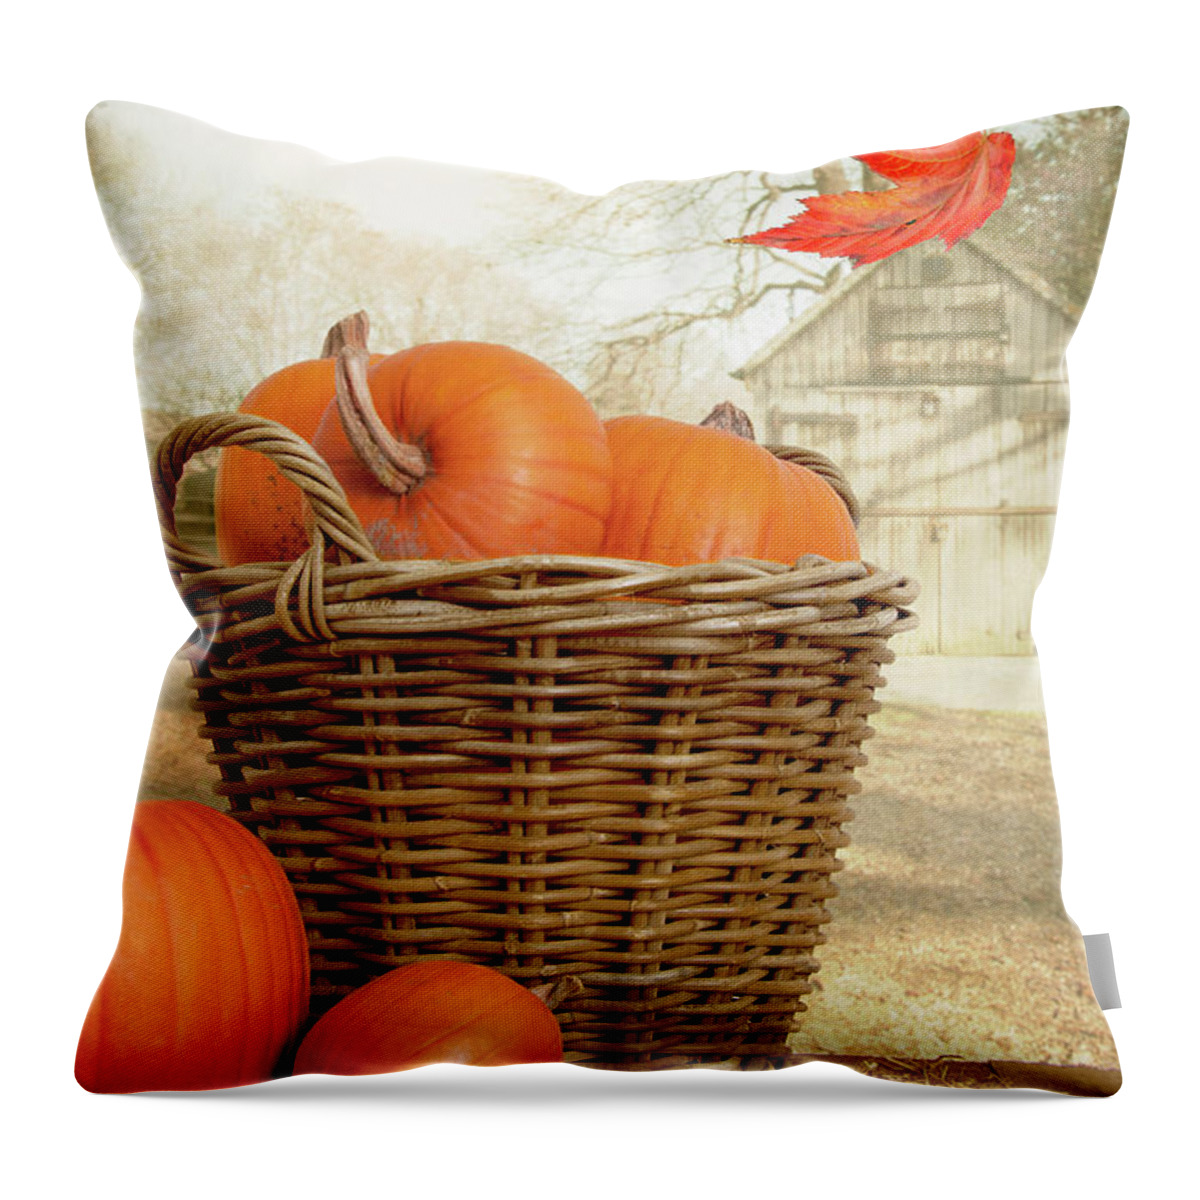 Pumpkin Throw Pillow featuring the photograph Pumpkins In A Wicker Basket Scene by Ethiriel Photography